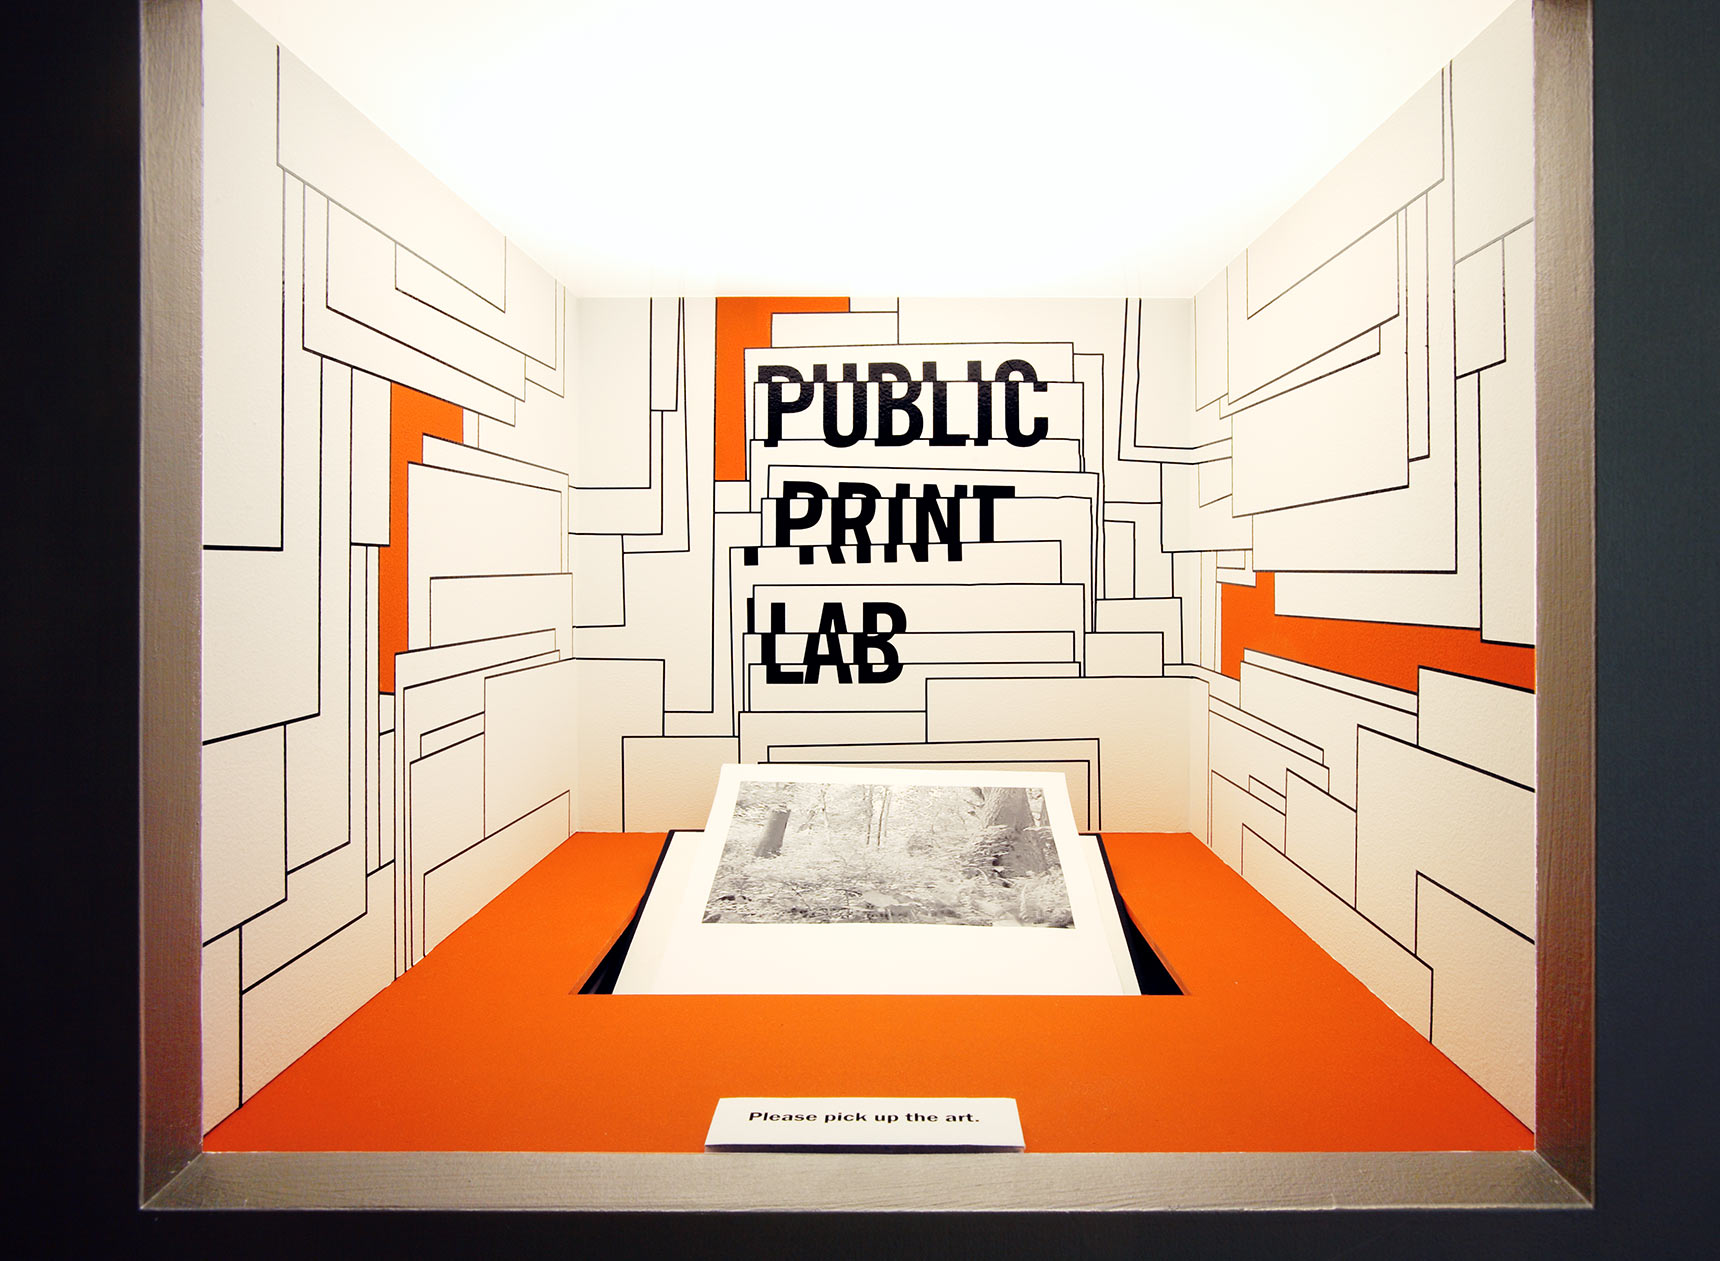 Public Print Lab participatory art installation, interactive laser printer in gallery